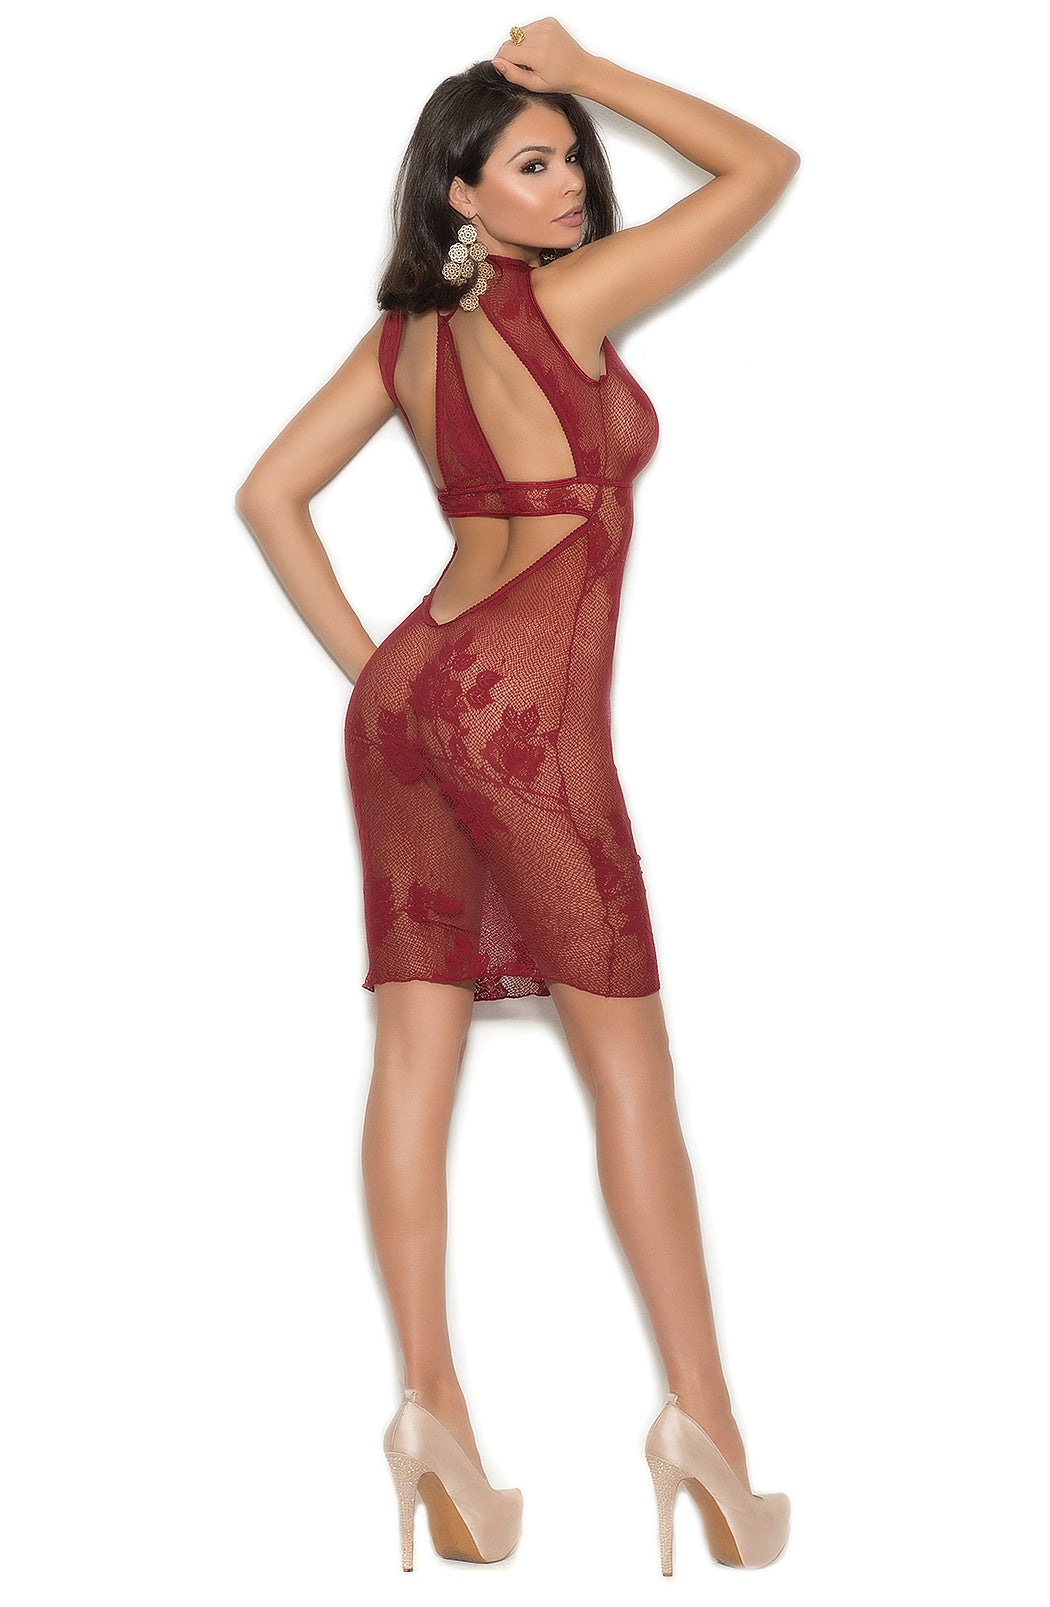 EM-1369 Burgundy lace mini dress - Sexylingerieland